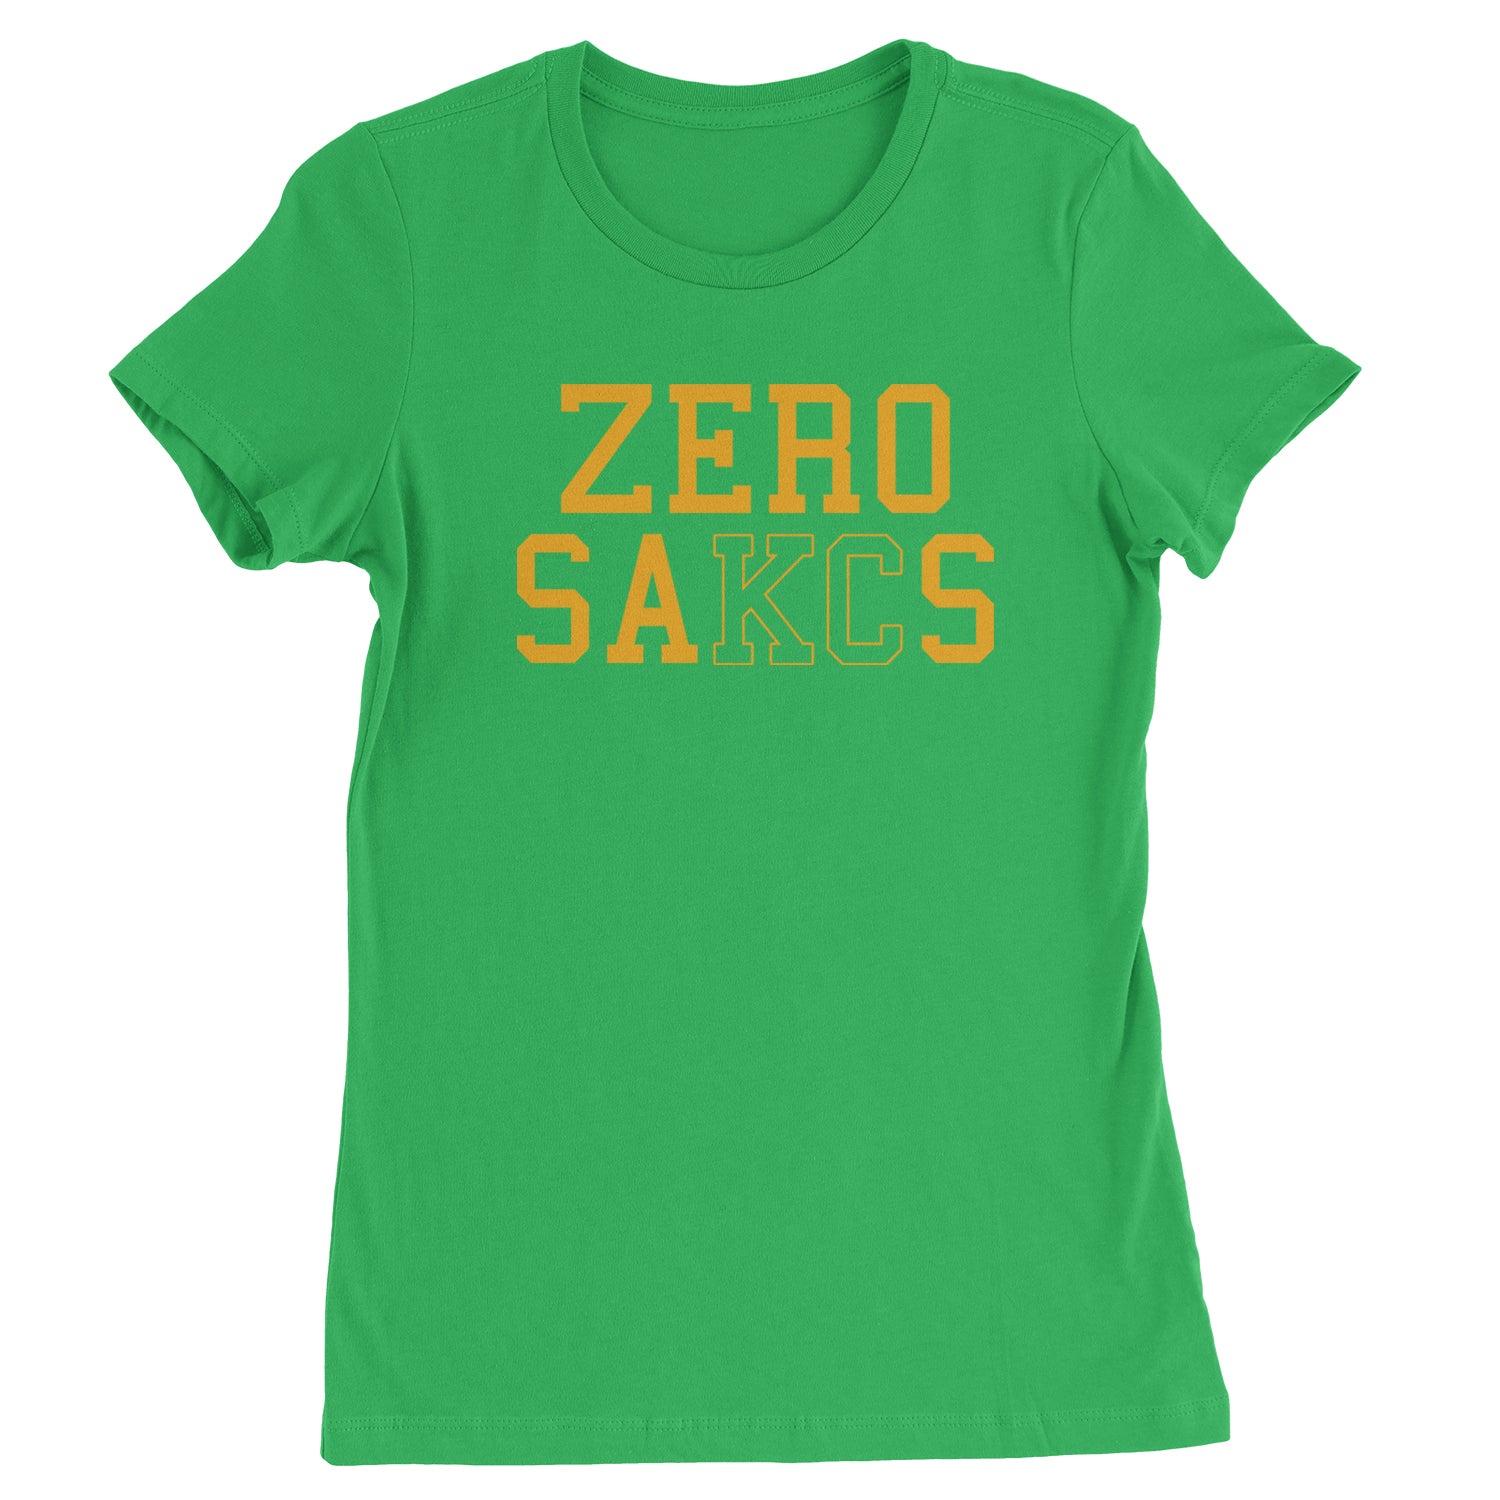 Zero Sacks Kansas City Womens T-shirt ball, brown, foot, football, kelc, orlando, patrick, sacks, sakcs by Expression Tees